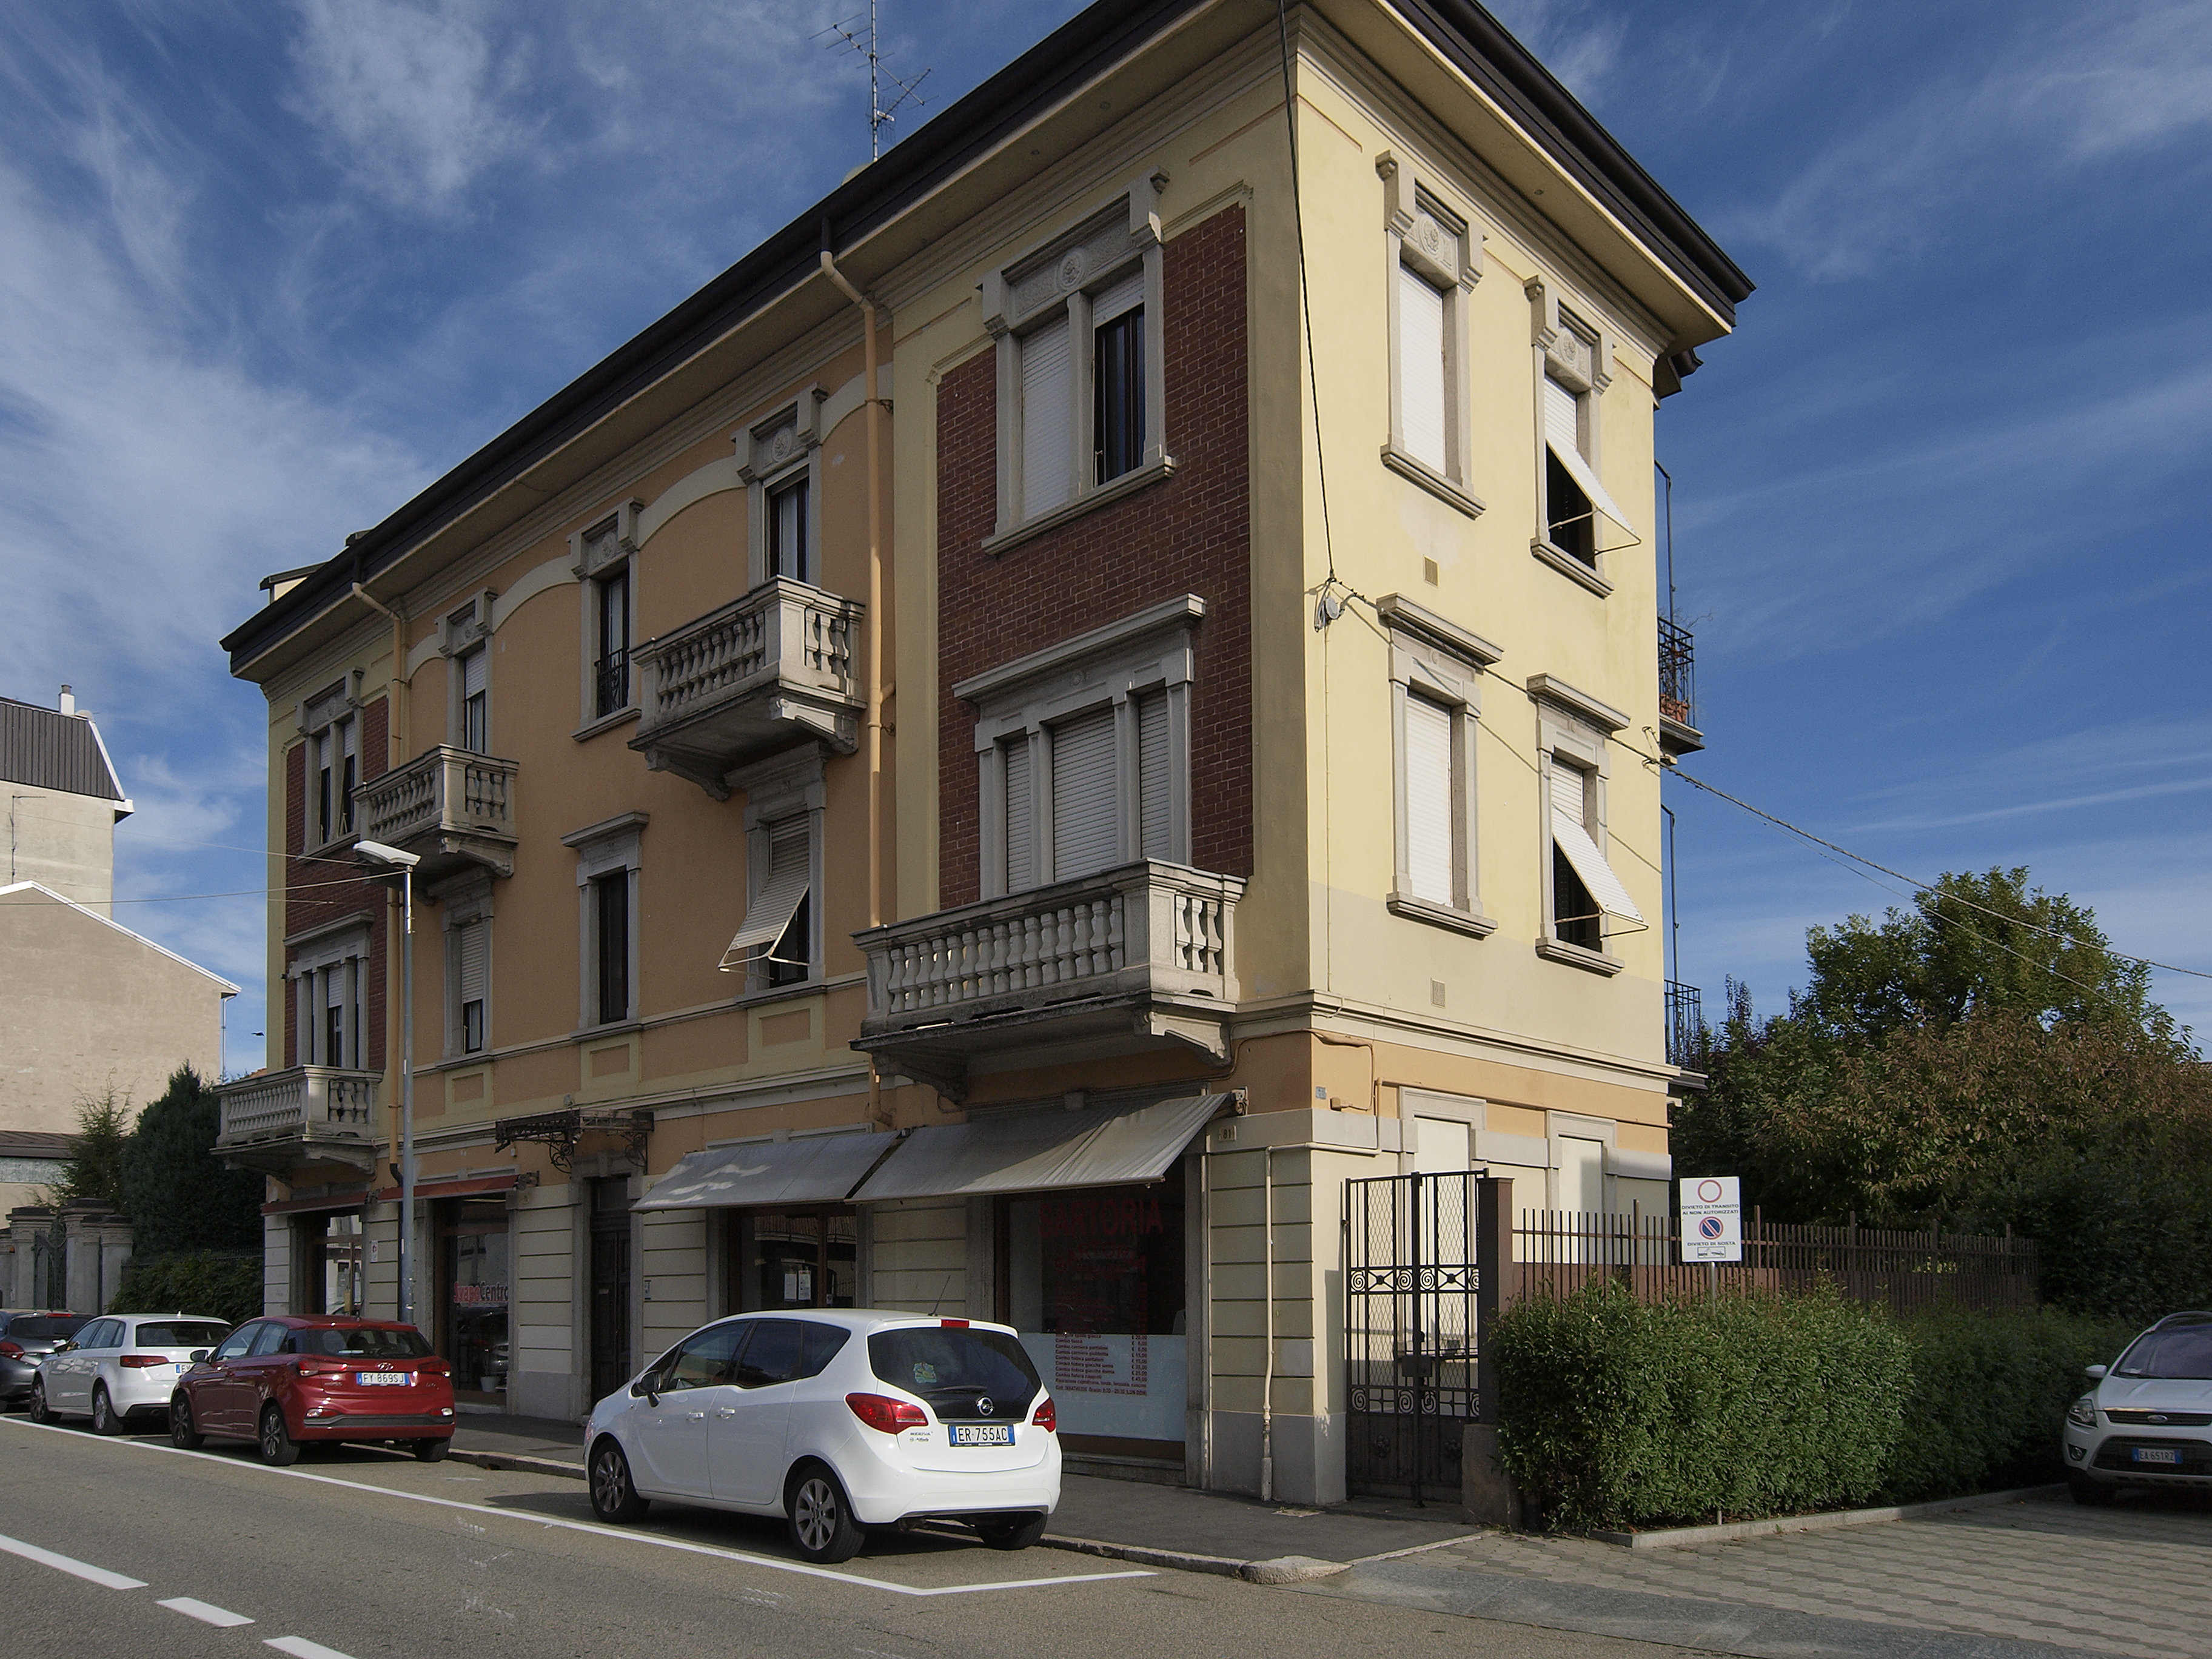 [Palazzo in Via Novara, 77] (palazzo) - BORGOMANERO (NO)  (XX, primo quarto)